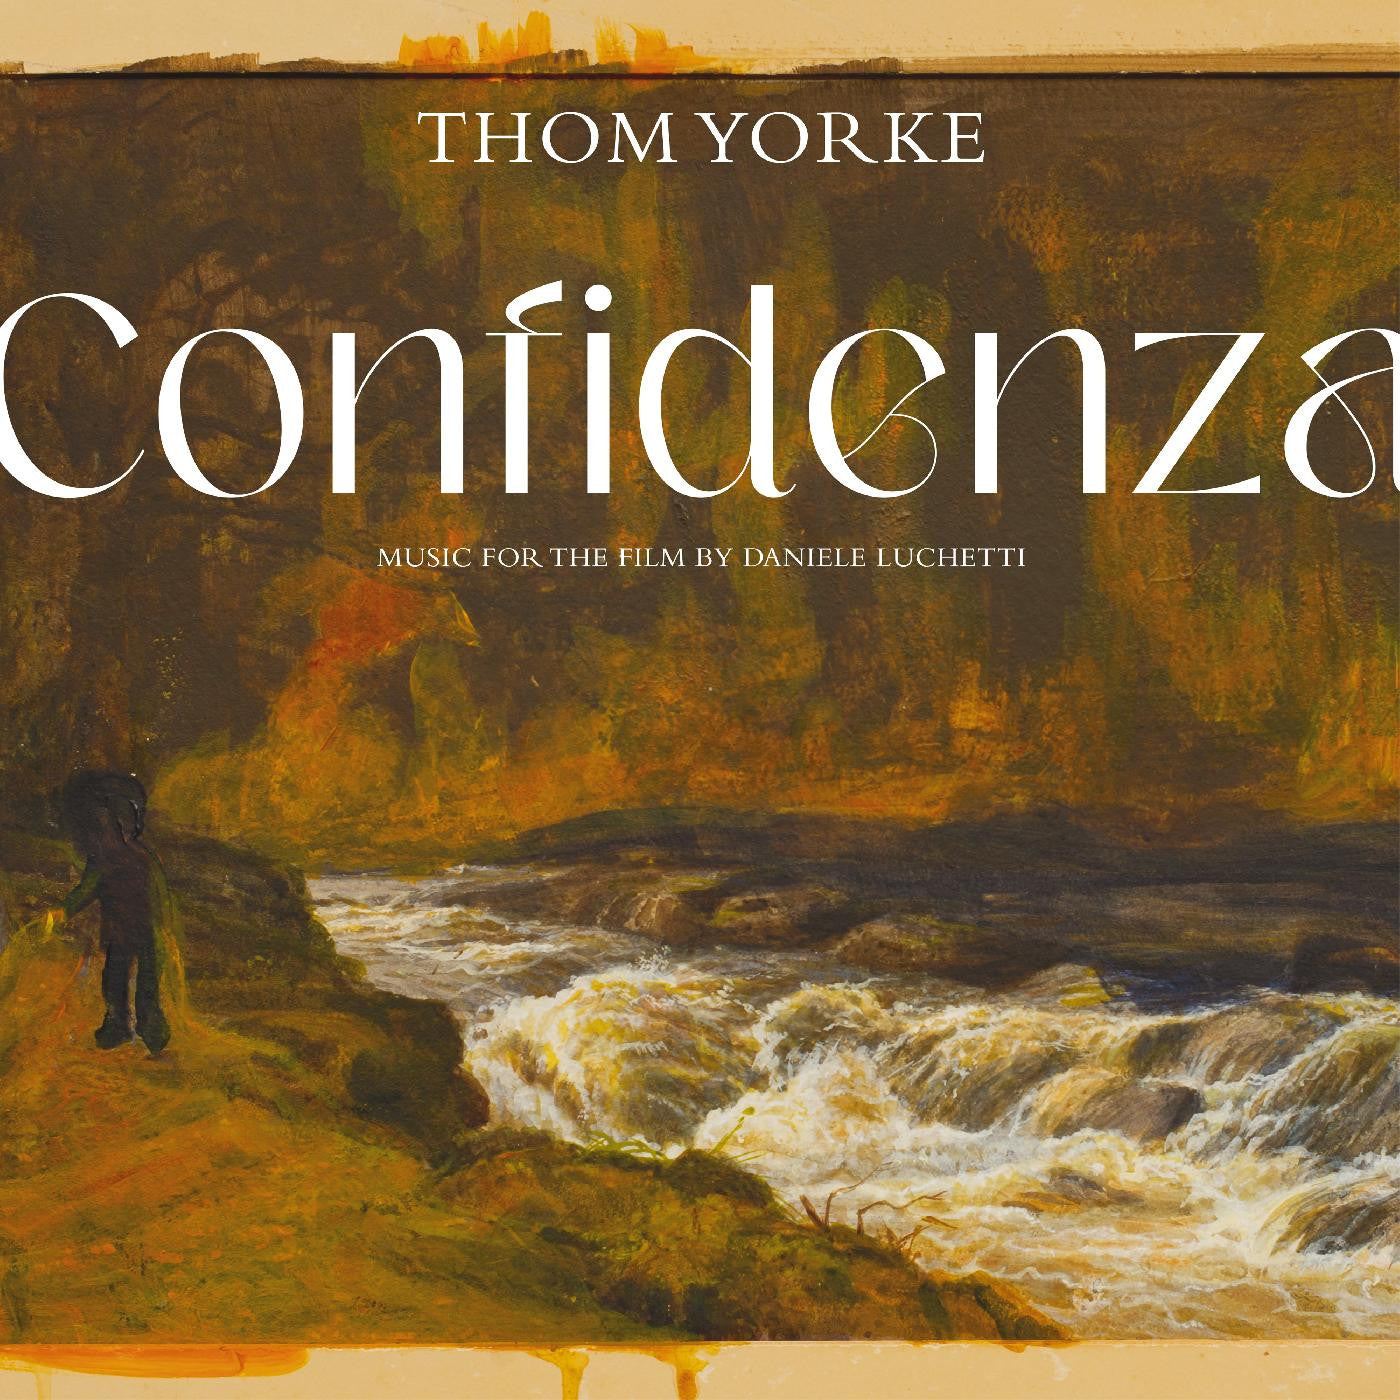 Order Thom Yorke - Confidenza: Original Soundtrack (Indie Exclusive Cream Vinyl)